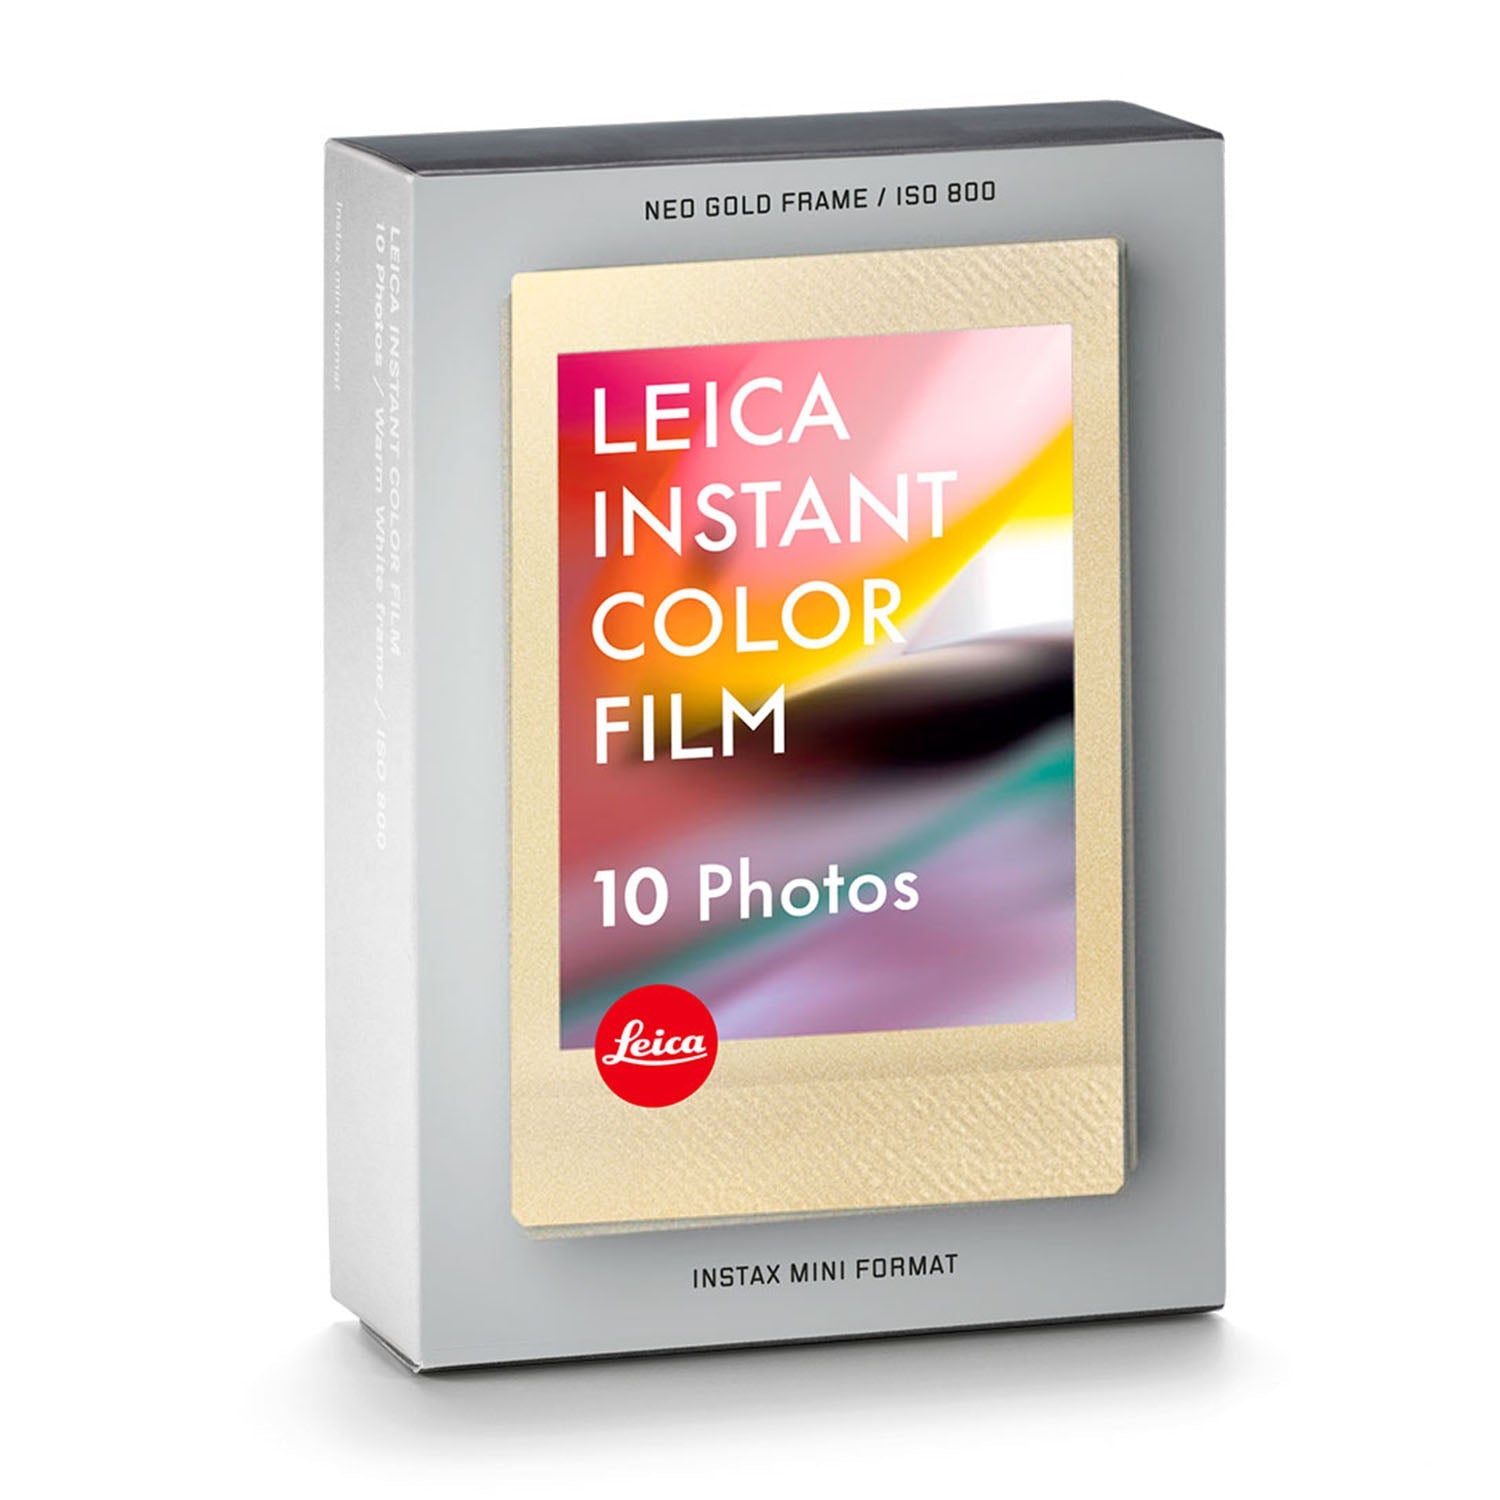 Leica Sofort Color Film Pack